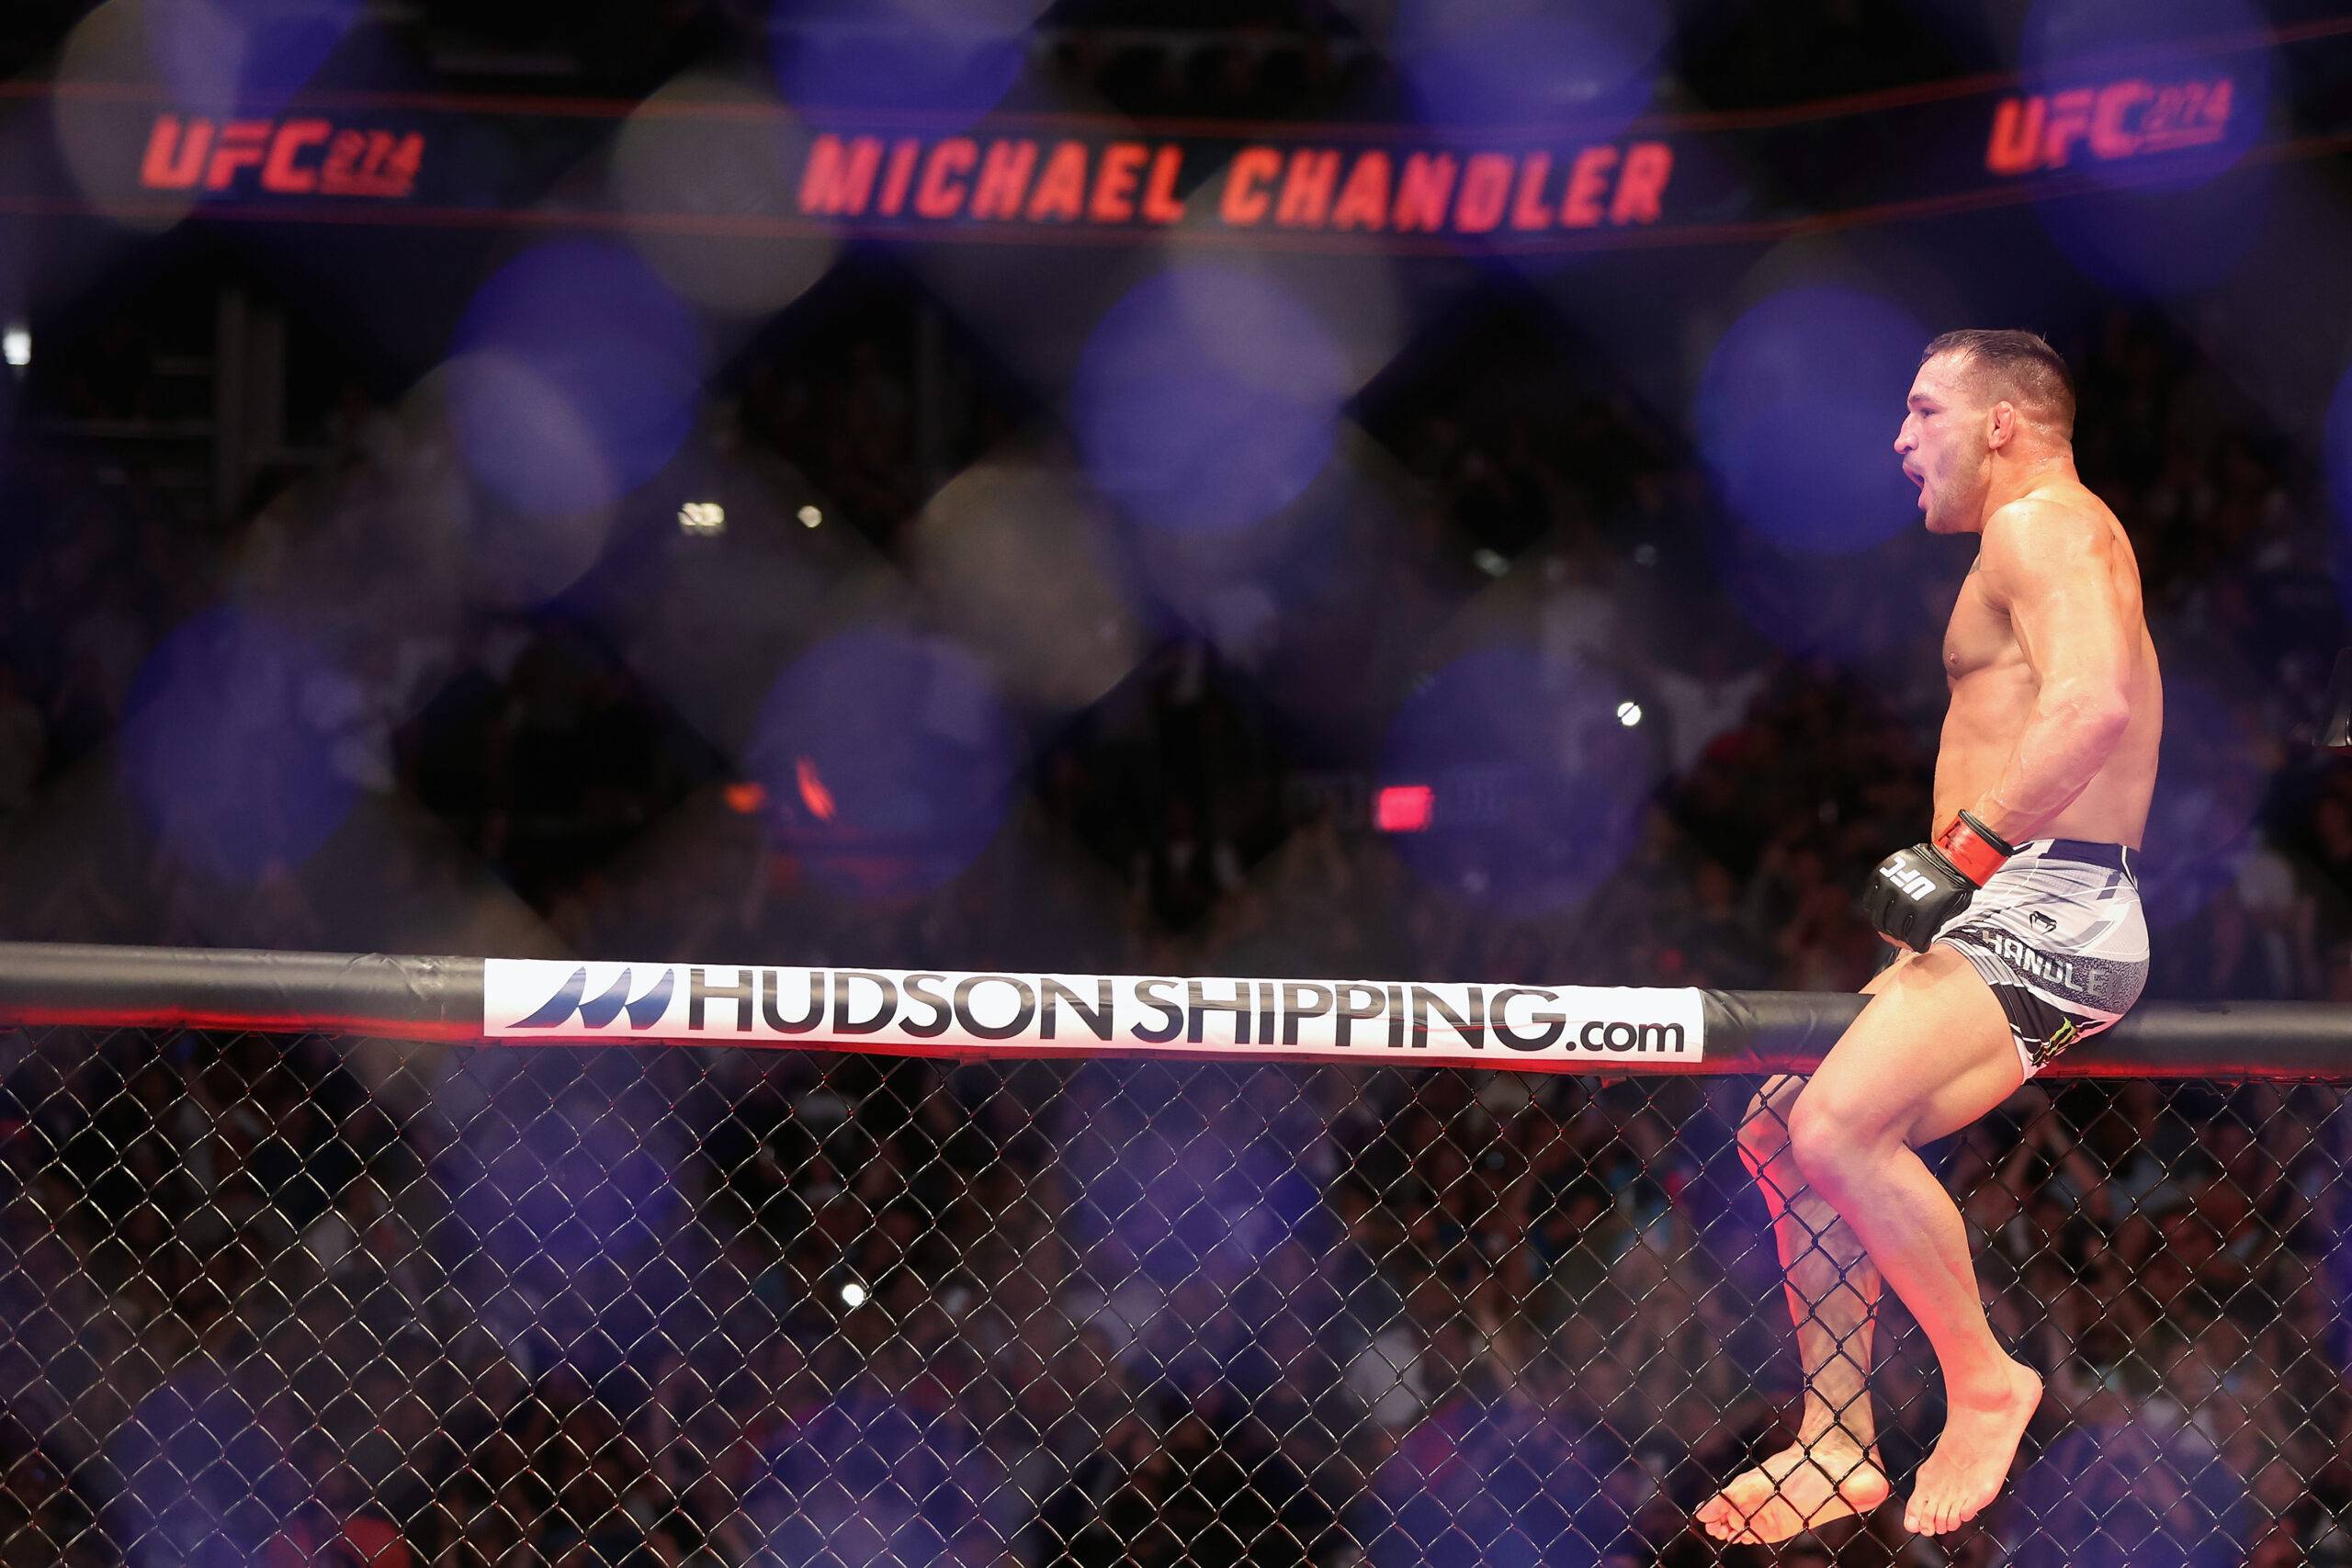 Michael Chandler sitting on the UFC octagon